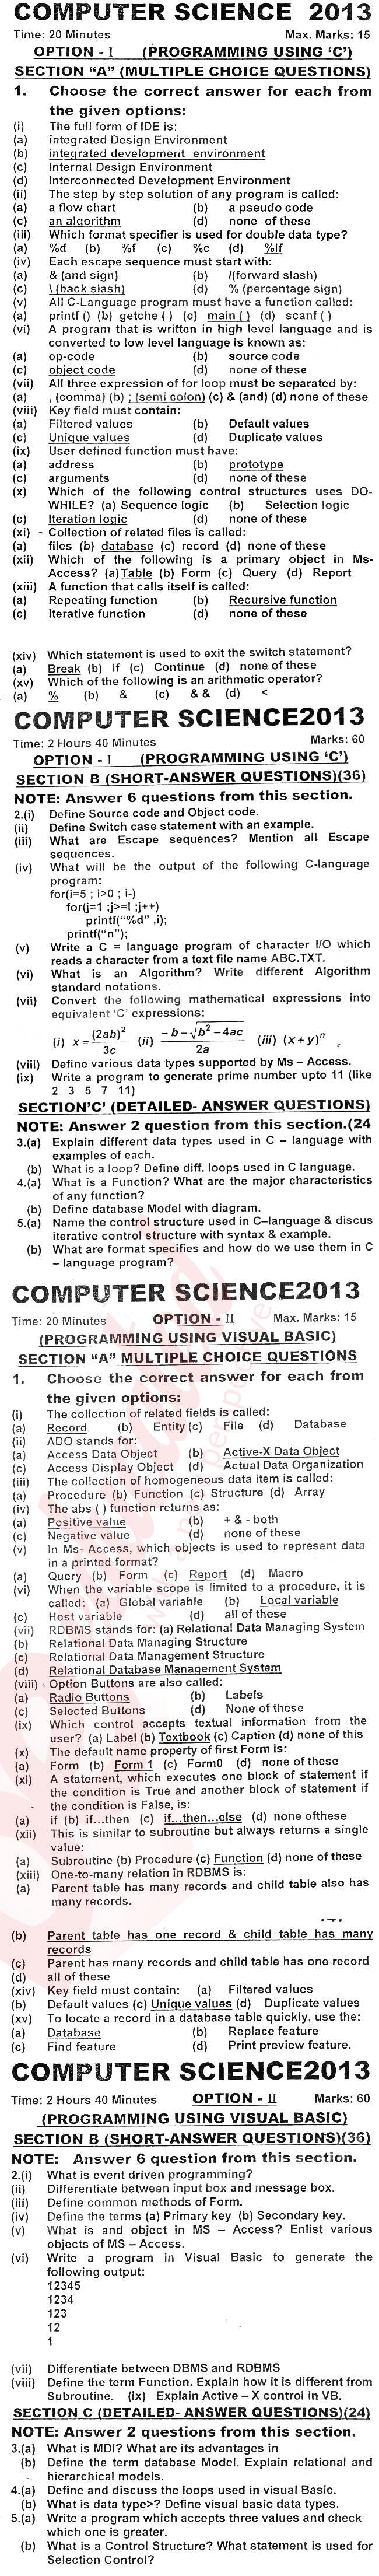 Computer Science ICS Part 2 Past Paper Group 1 KPBTE 2013